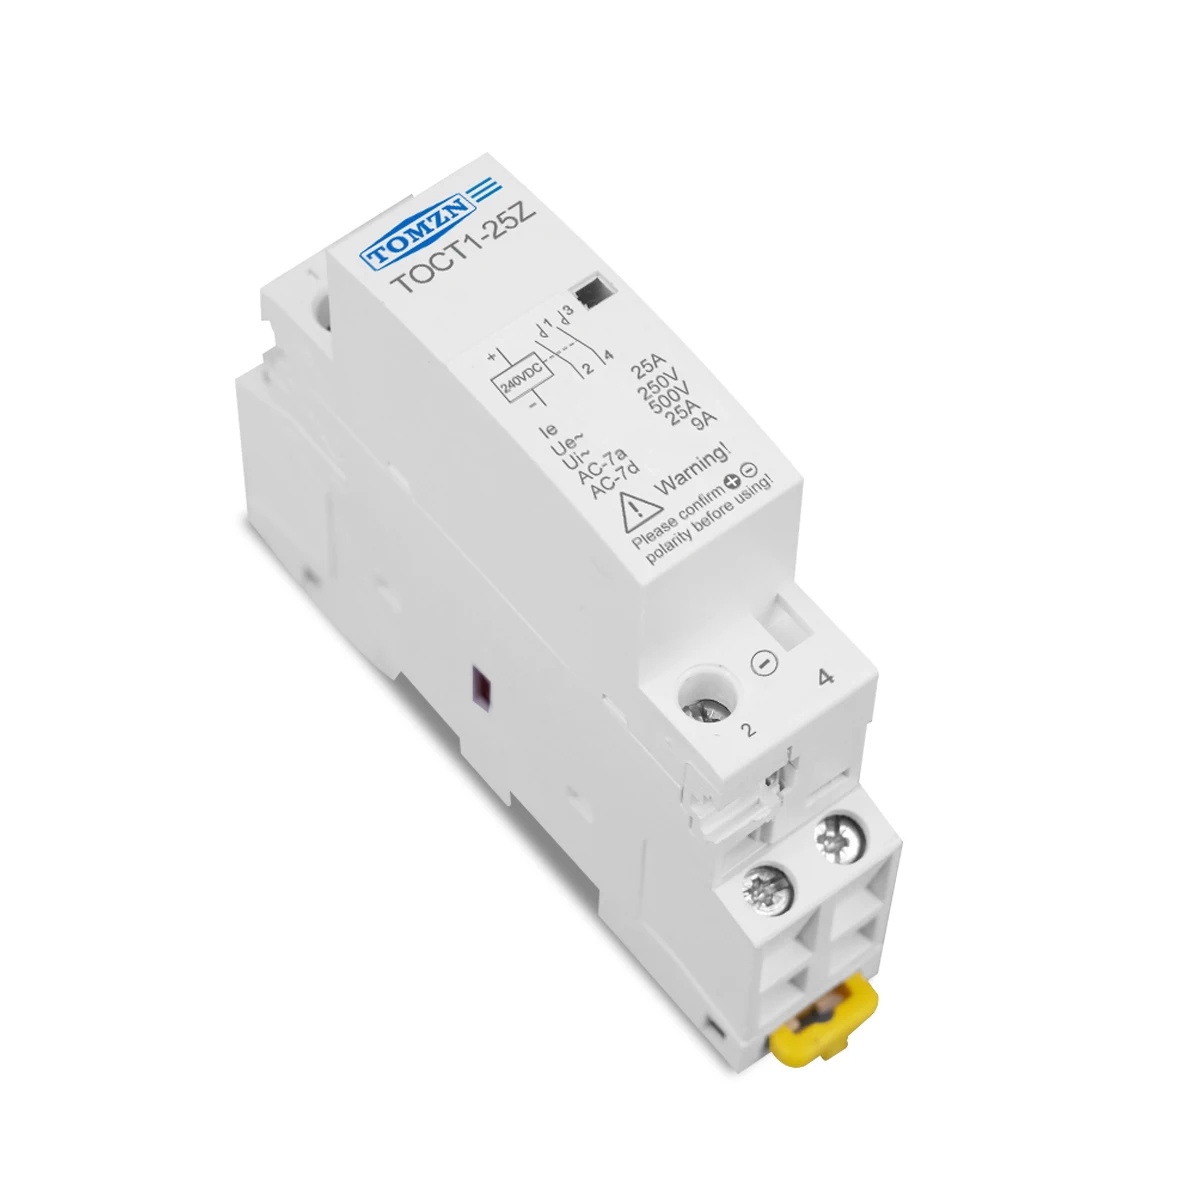 Contacteur,Contacteur éLectrique Contact modulaire for rail DIN 2P 25A,  220V / 230V 50 / 60Hz, AC Domestique, 2NO 2NC ou 1NC 1NC (Color : 16A 1NO  1NC)